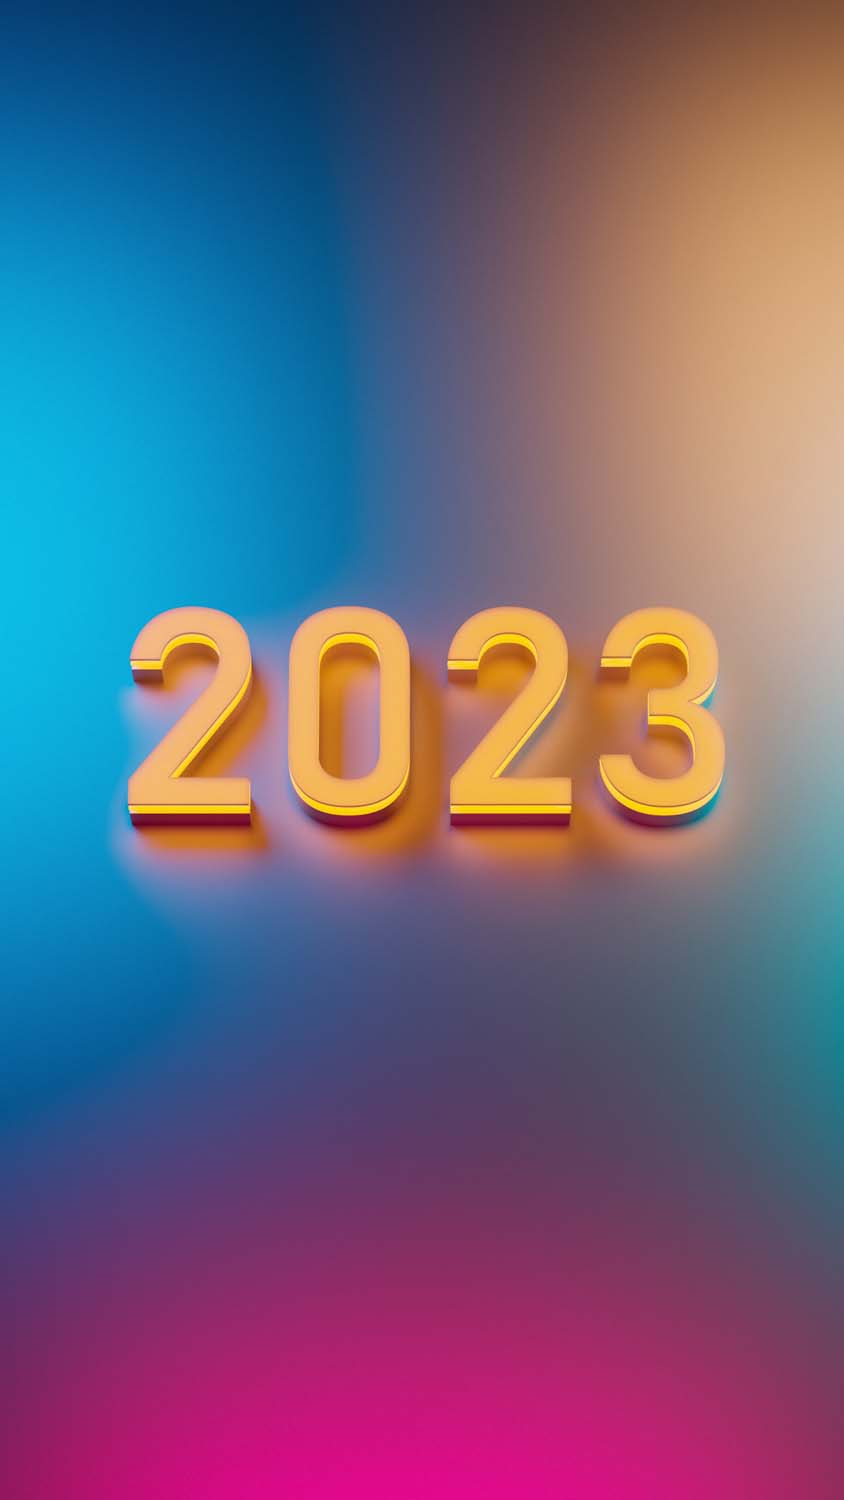 2023 IPhone Wallpaper HD  IPhone Wallpapers